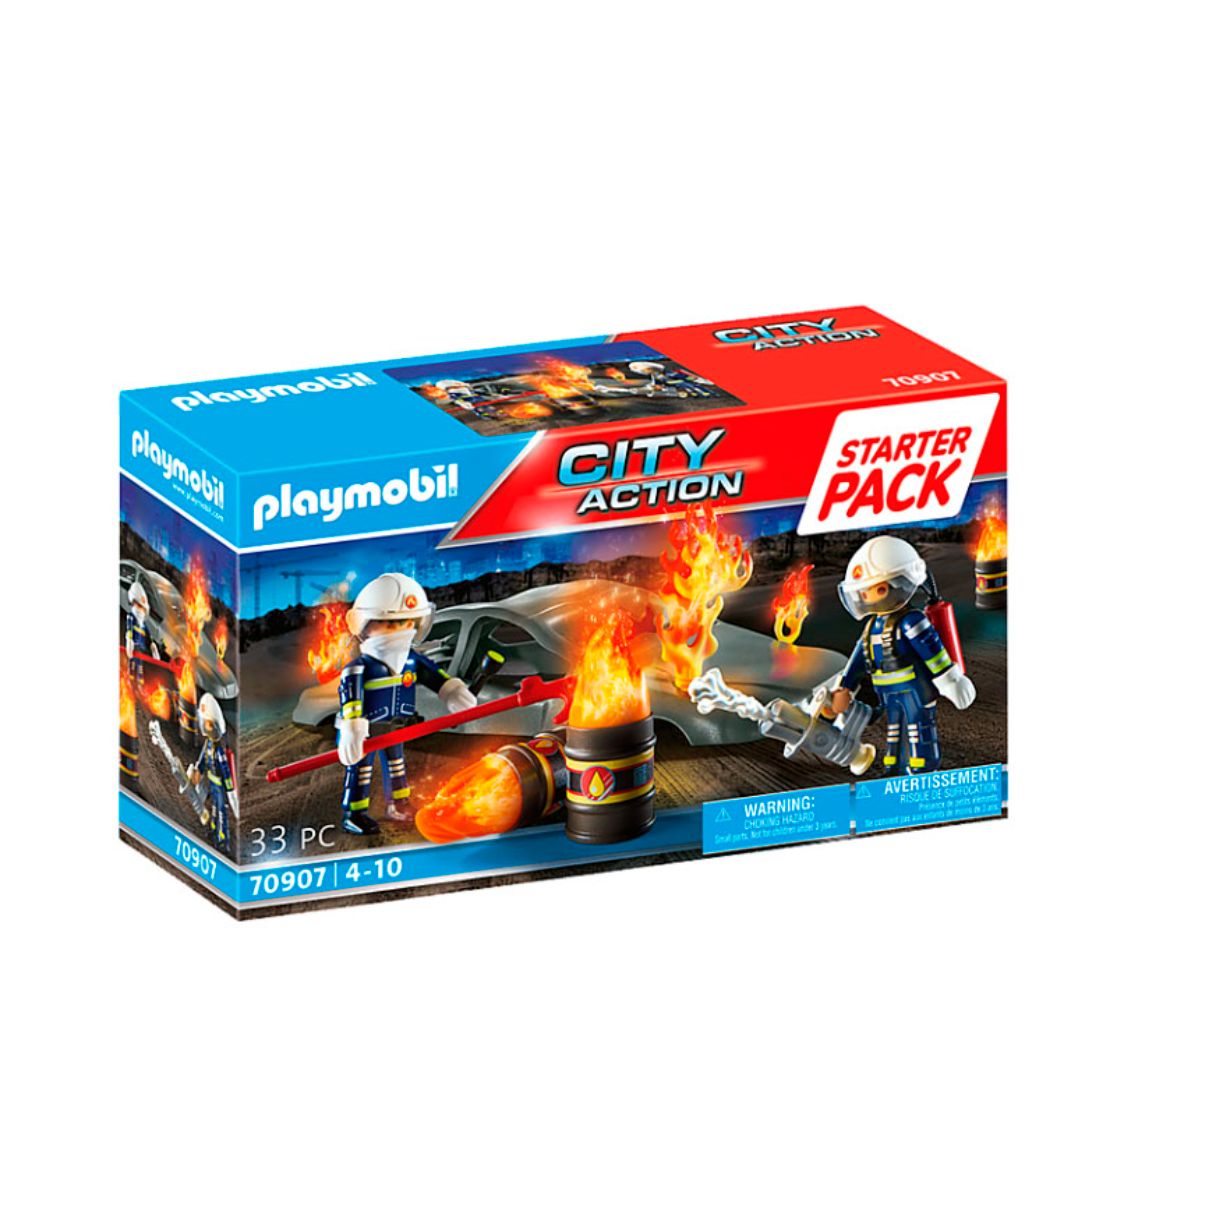 playmobil city action starter pack simulacro de incendio (70907)